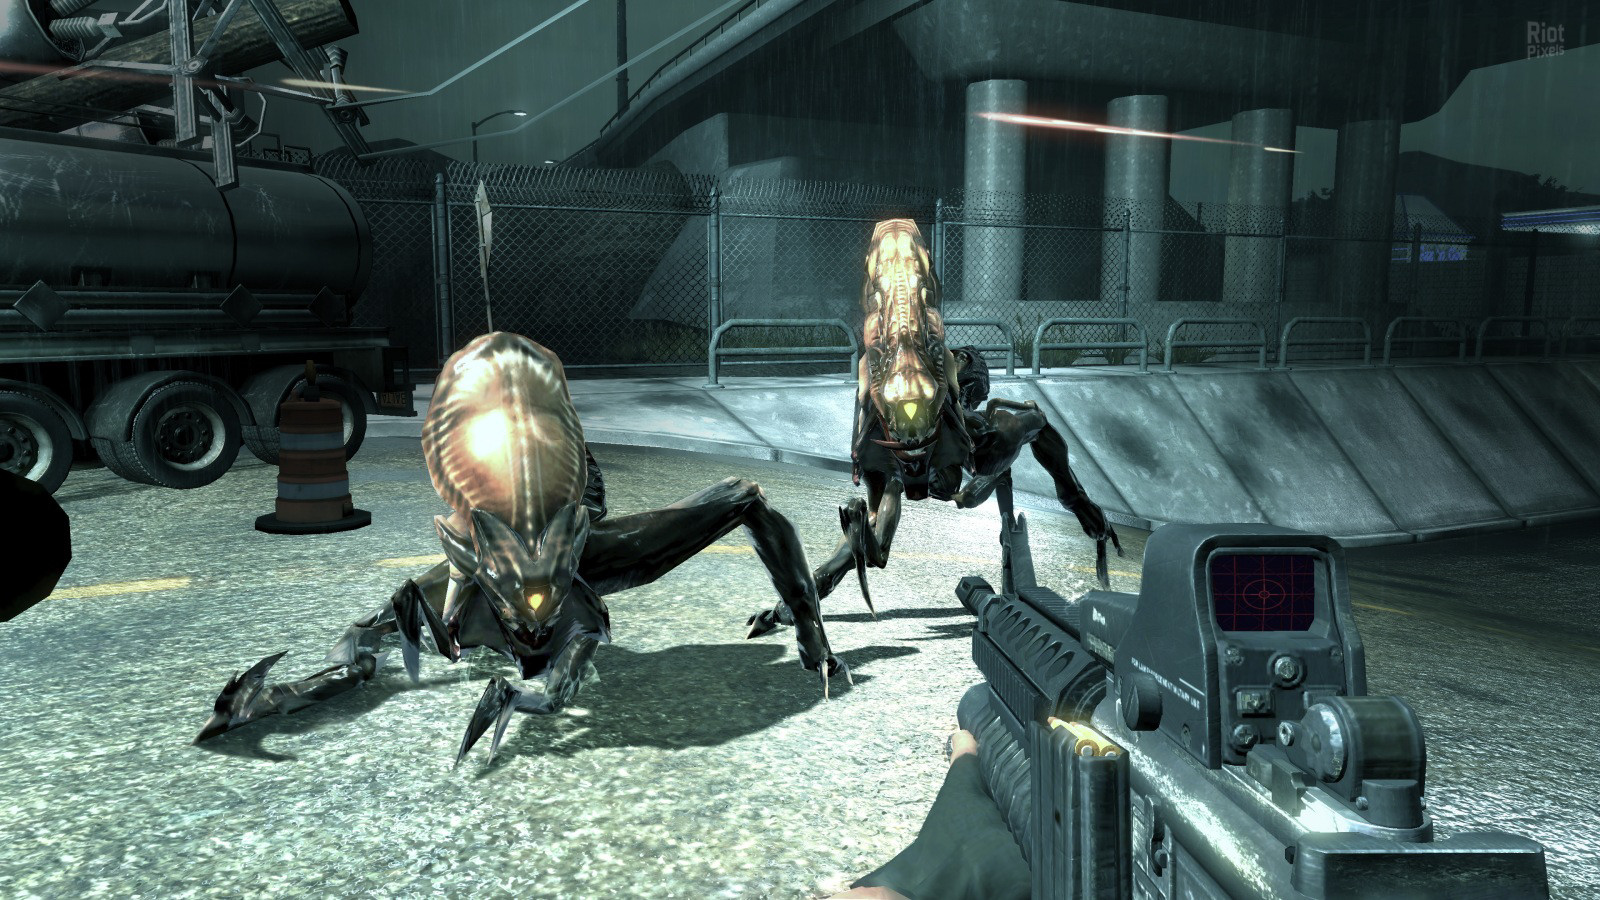 BlackSite: Area 51 - game screenshots at Riot Pixels, images